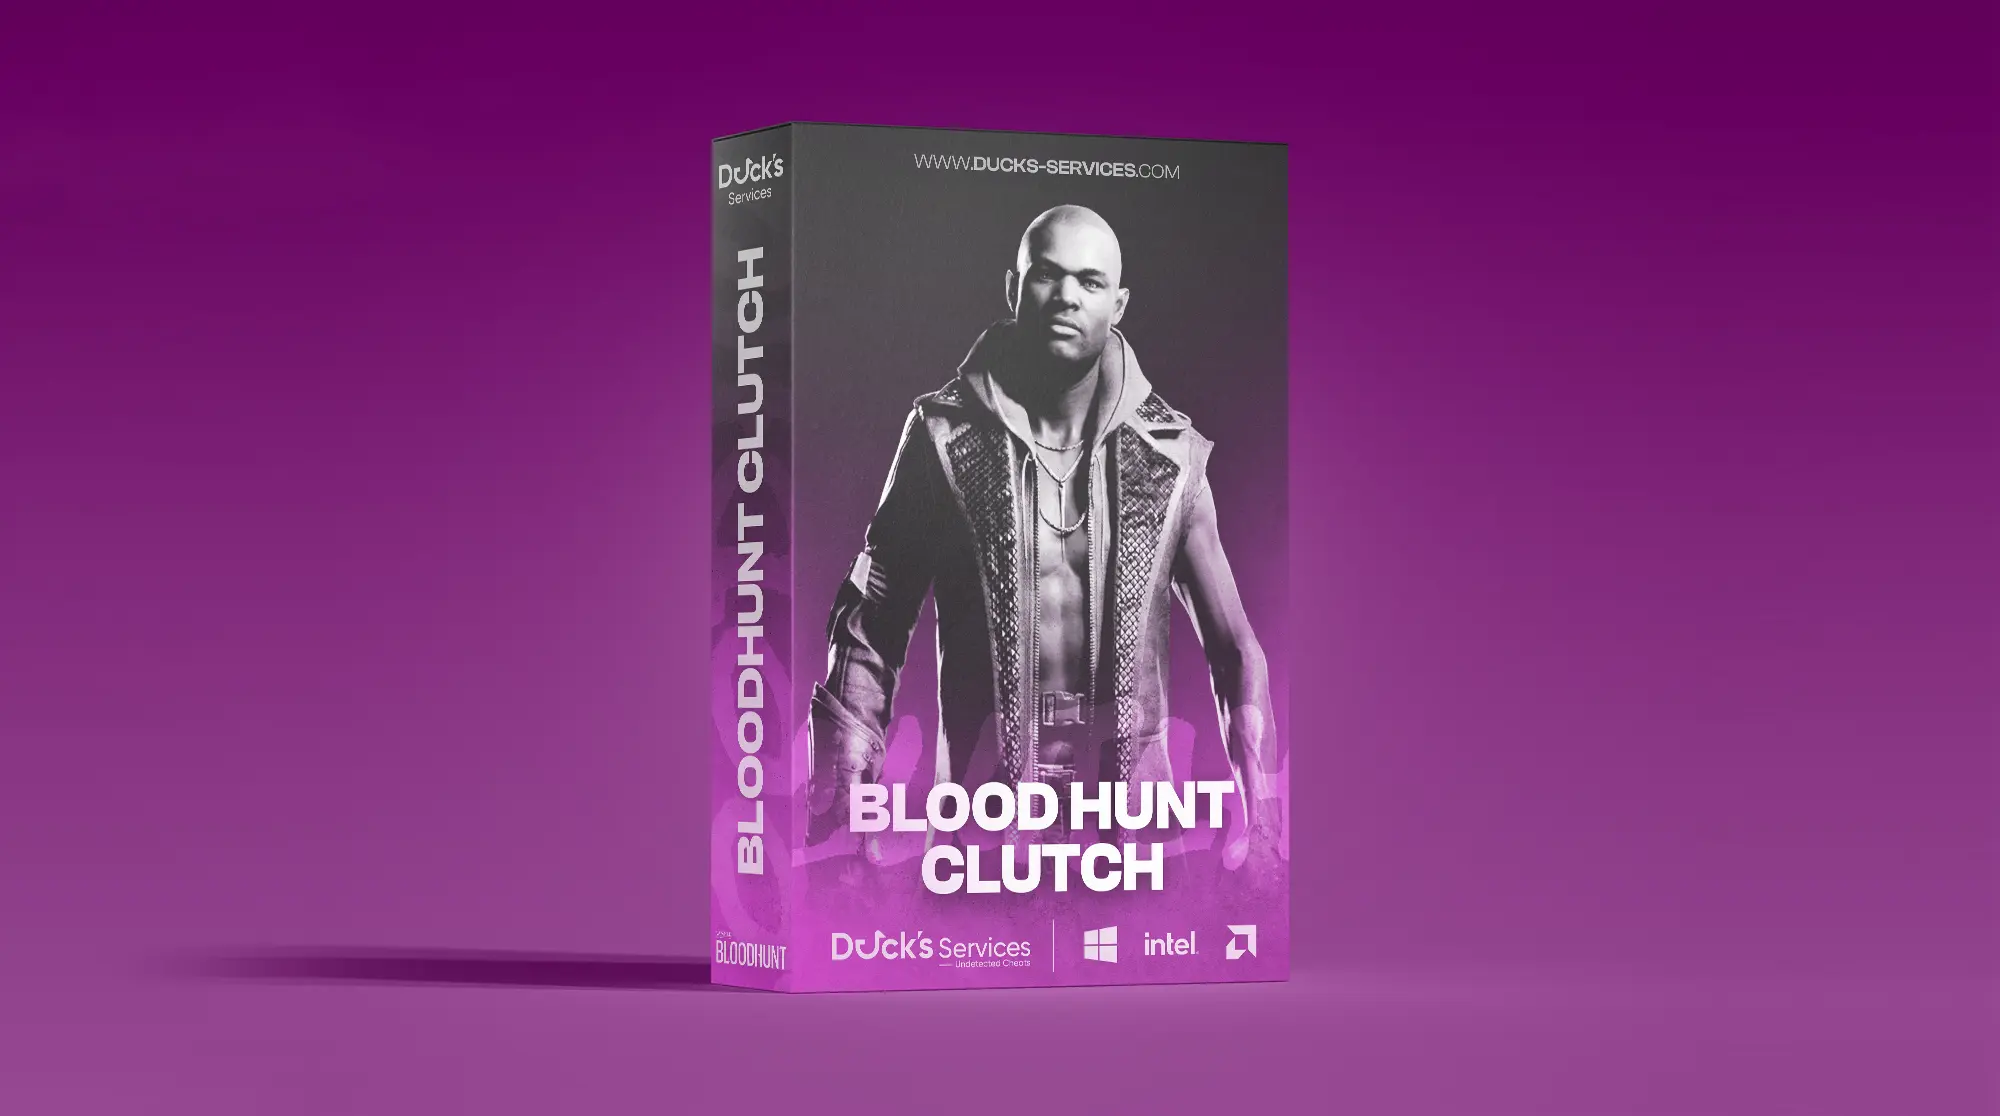 Bloodhunt Clutch 7 Days